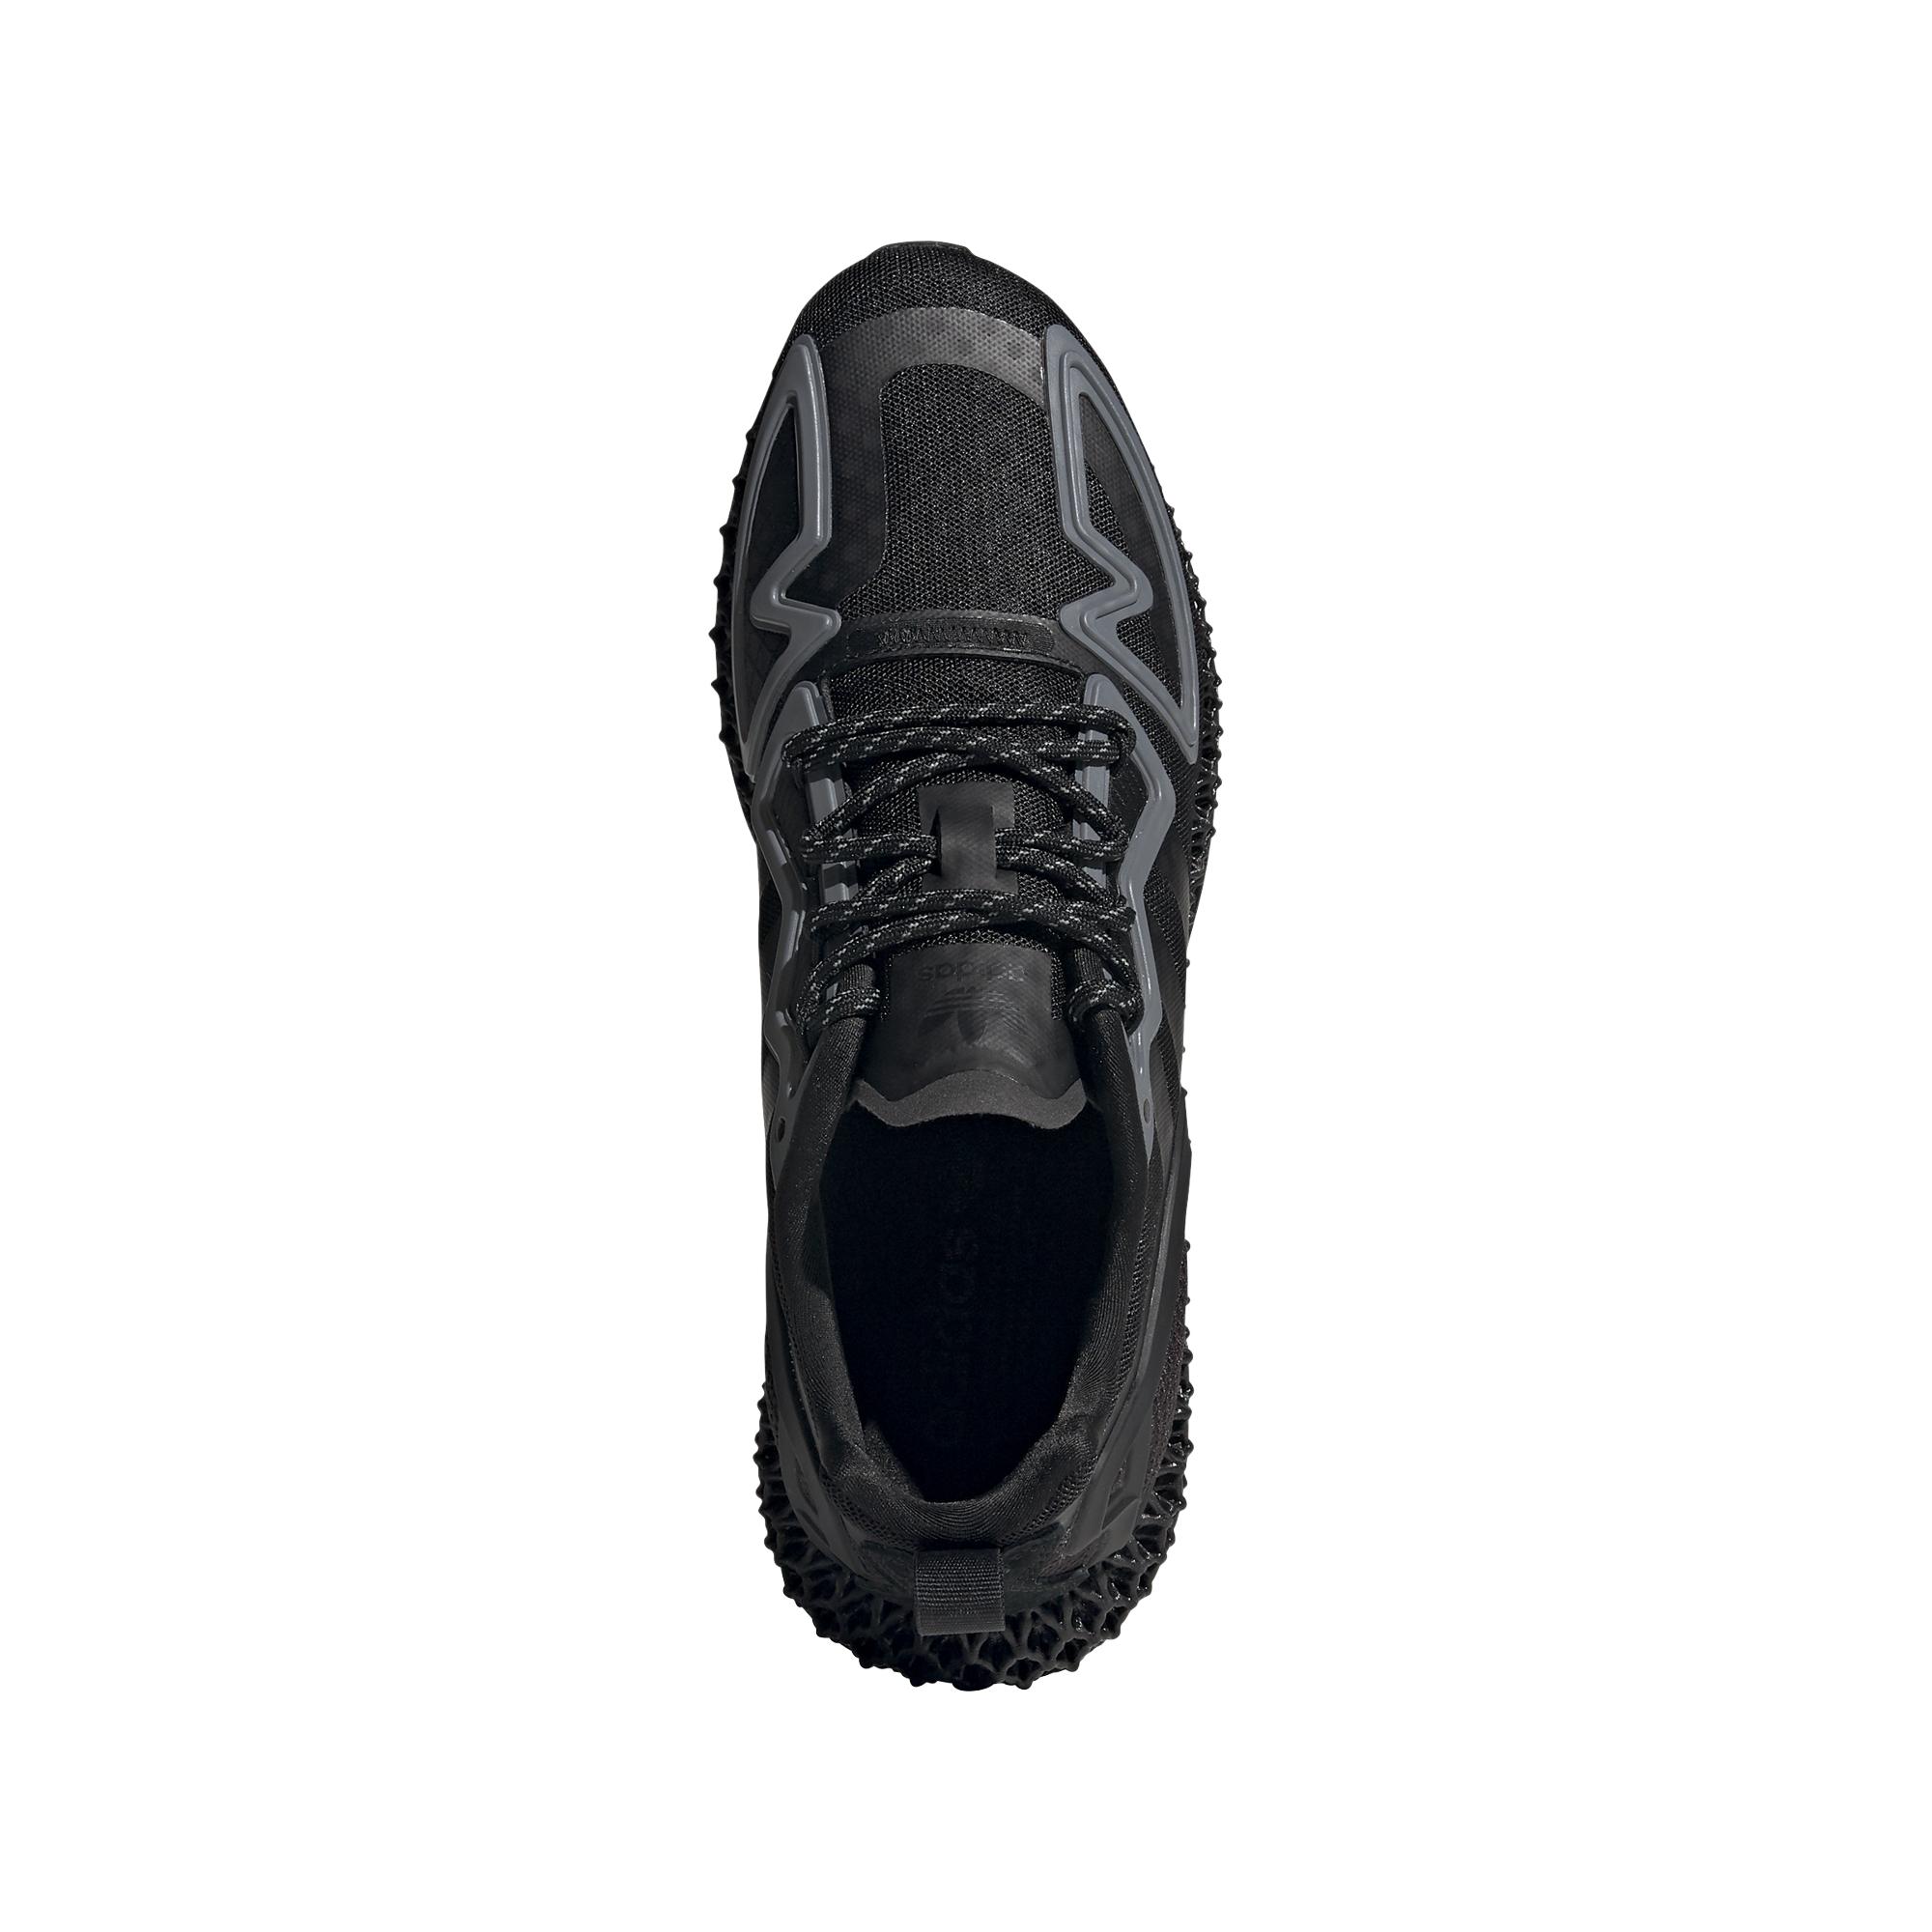 adidas Originals Suede Zx 2k 4d Black Mesh Sneakers for Men - Save 53% |  Lyst